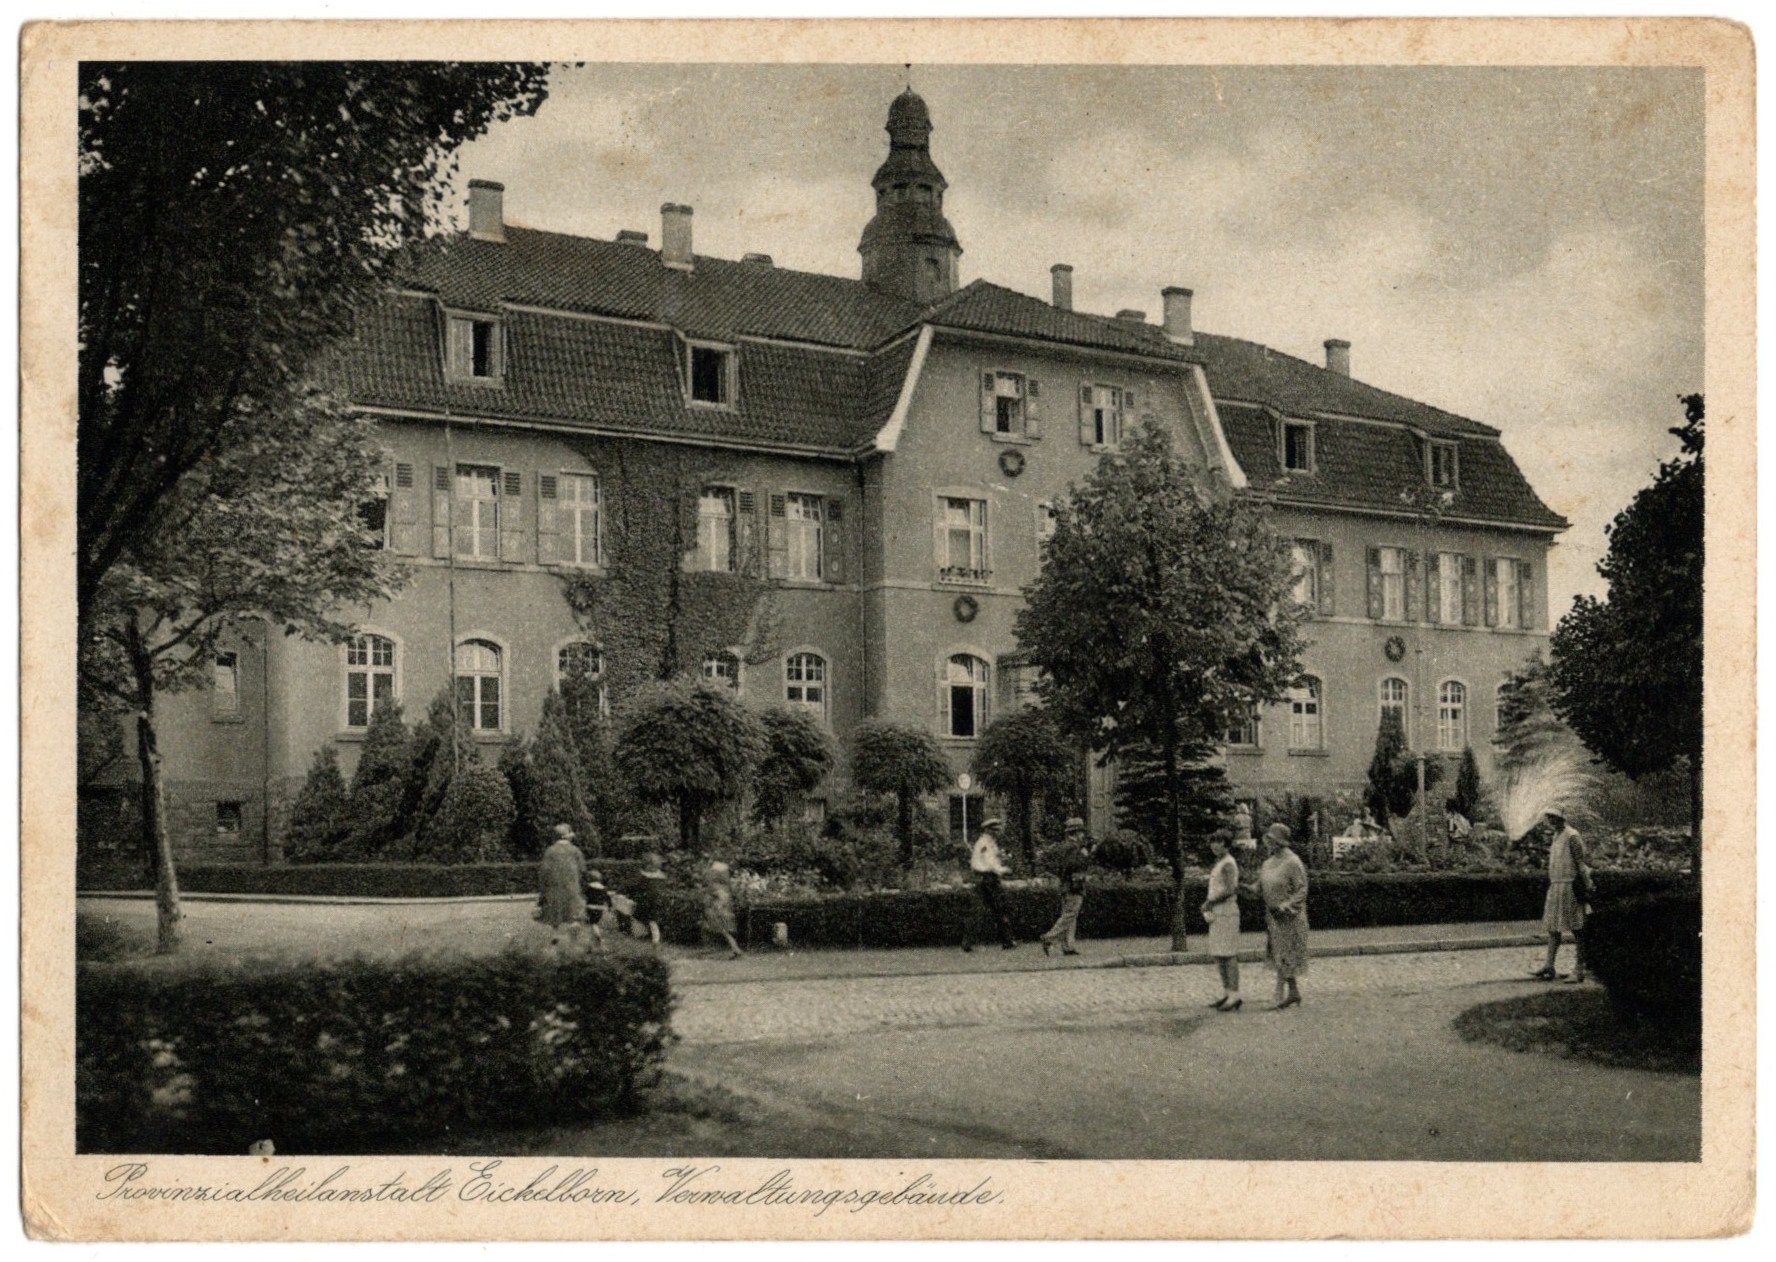 Postkarte "Provinzialheilanstalt Eickelborn" (Psychiatriemuseum Warstein CC BY-NC-SA)